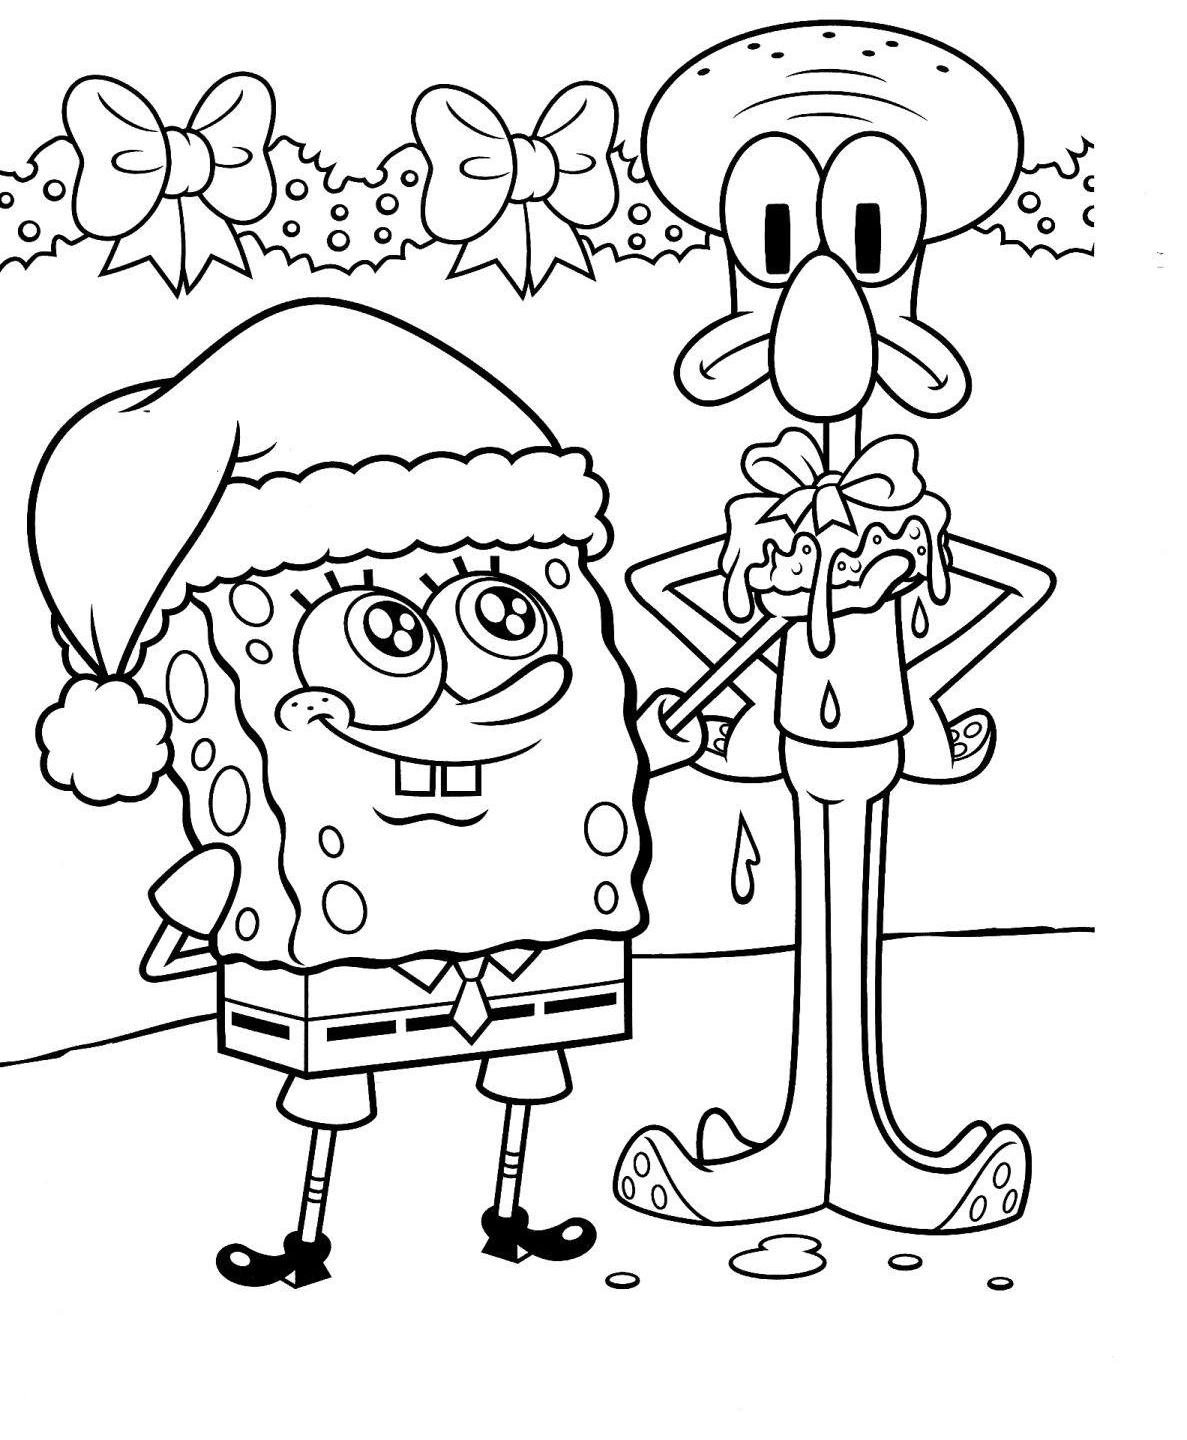 Free Printable Spongebob Coloring Pages at GetDrawings | Free download